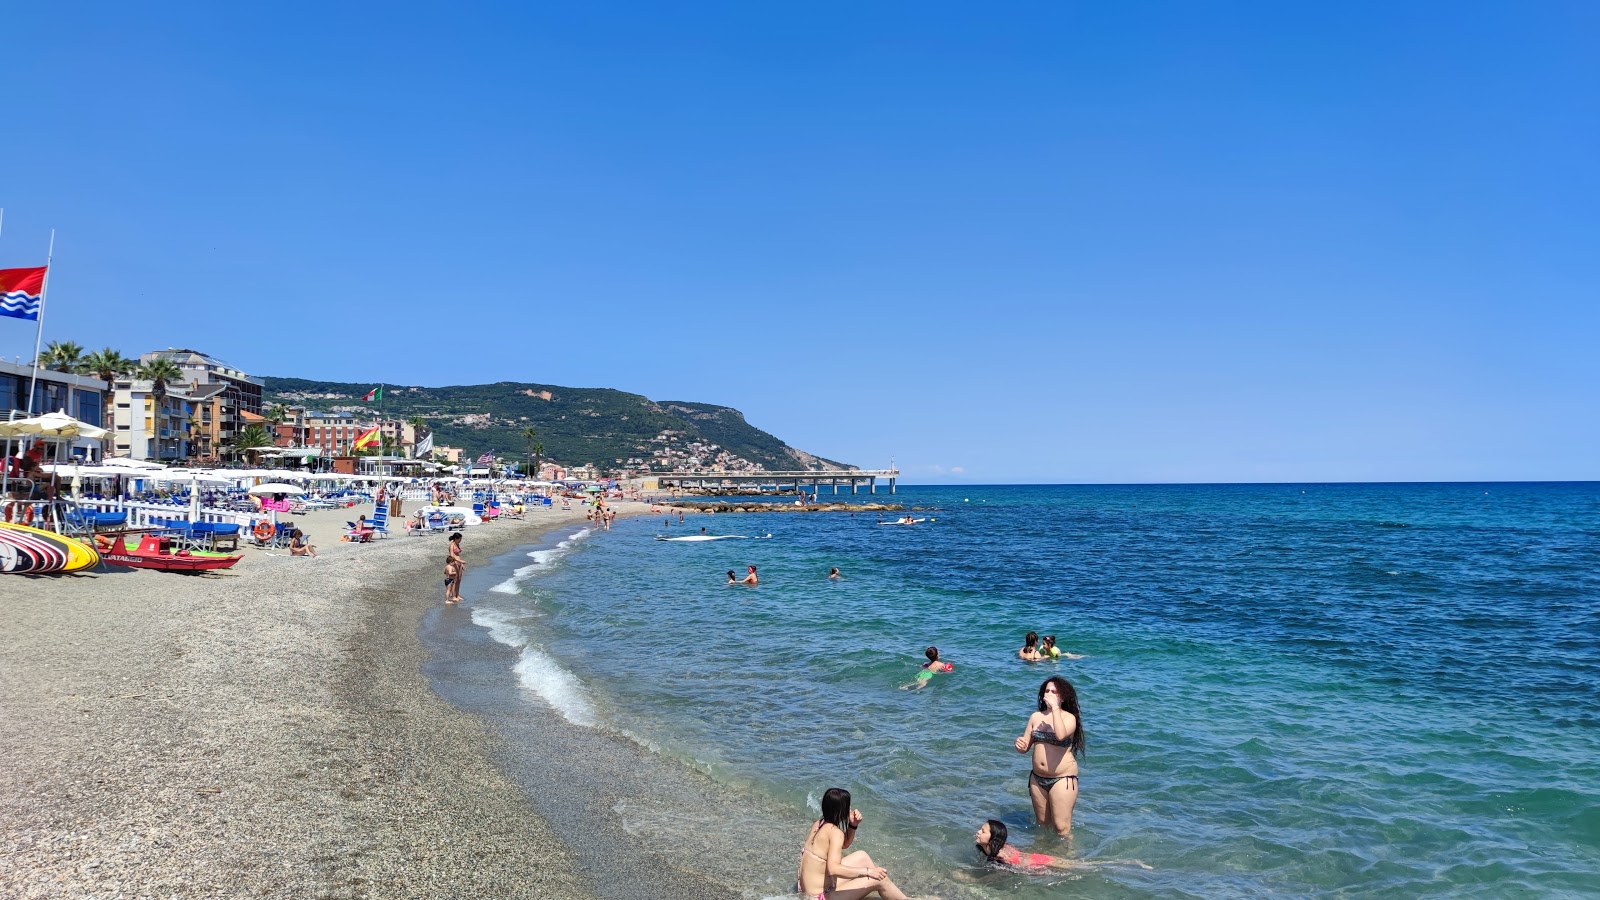 Photo of Spiaggia di Don Giovanni Bado with gray sand surface